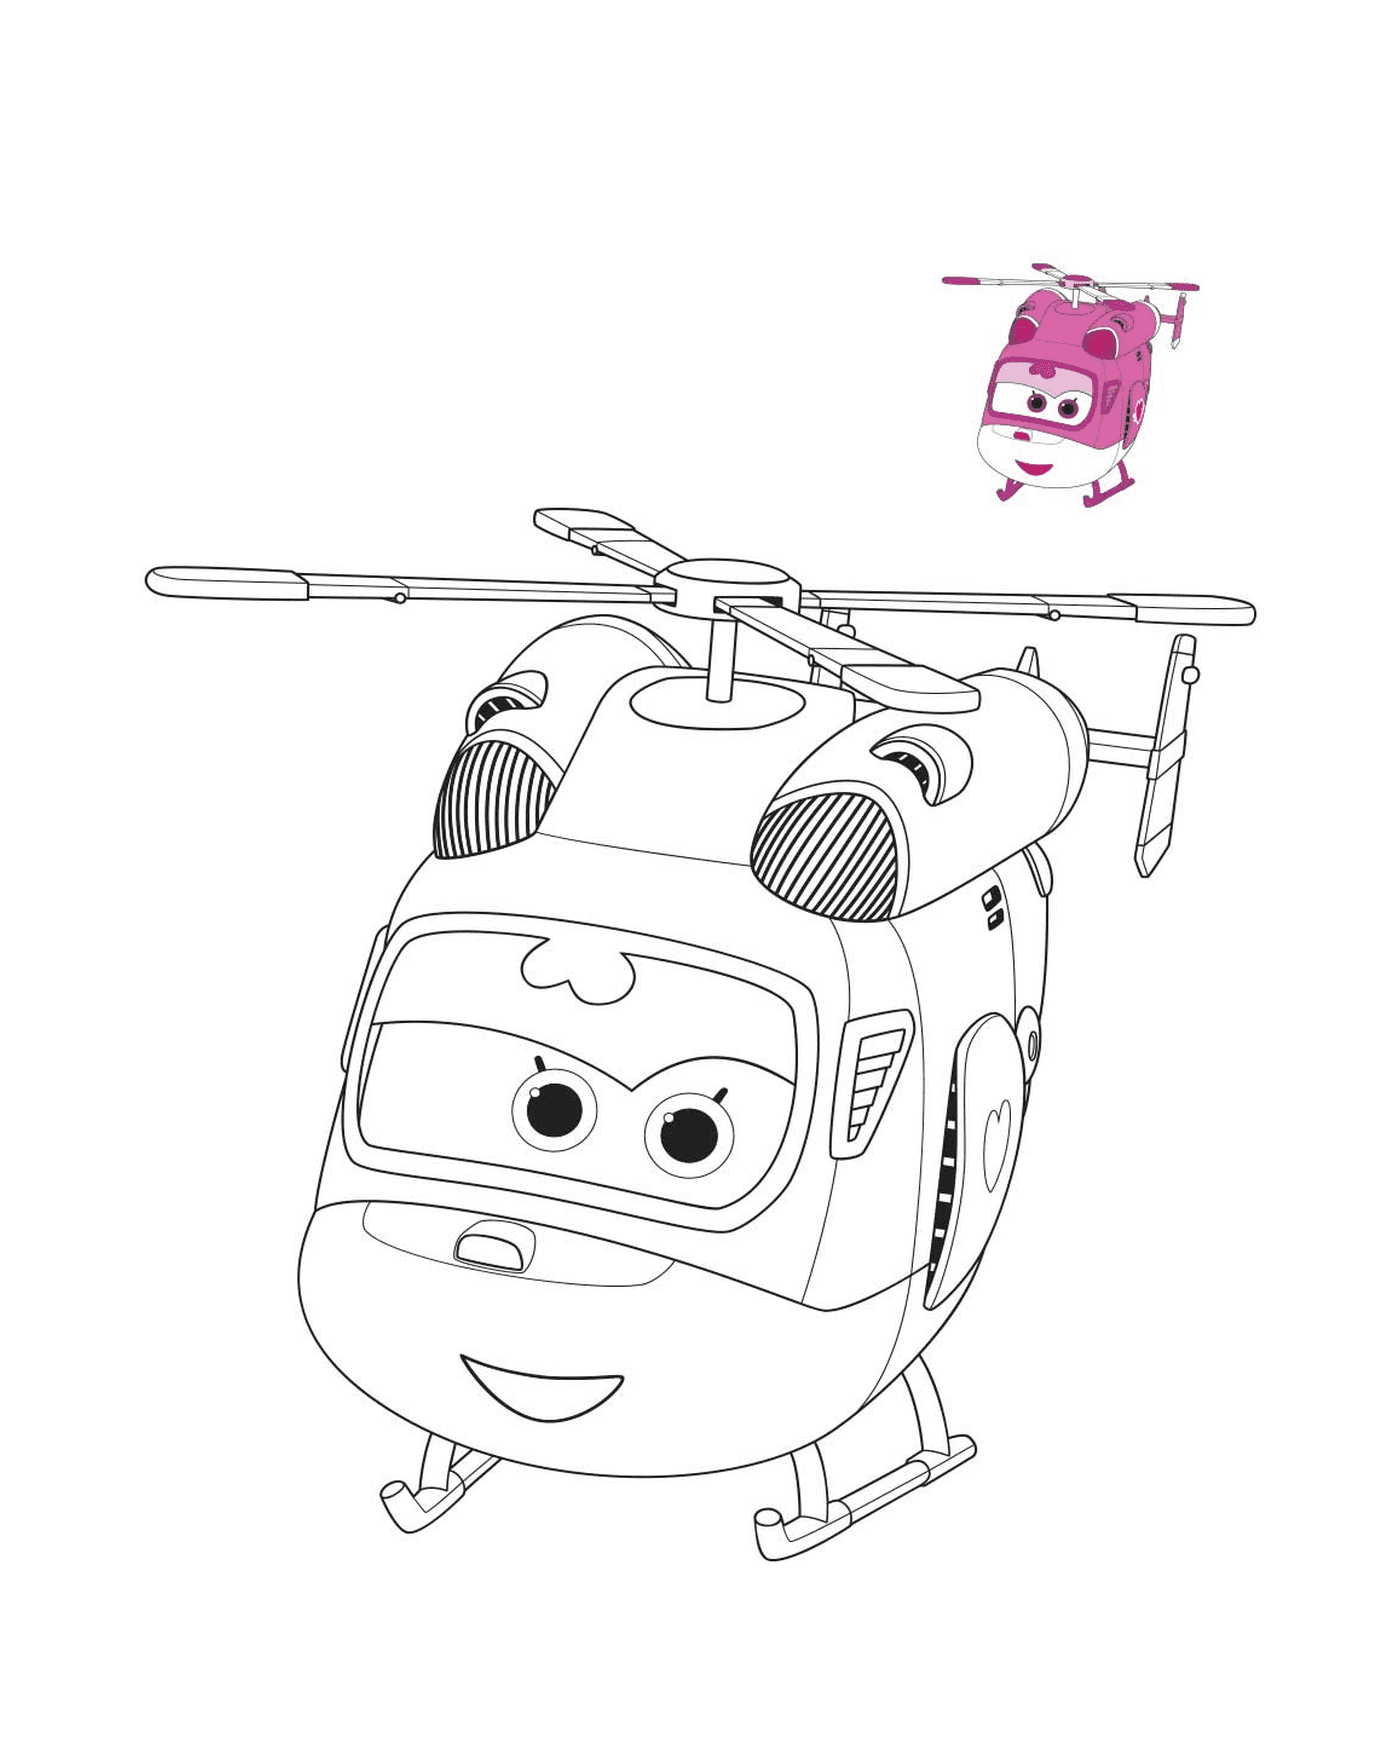   Dizzy, un hélicoptère 